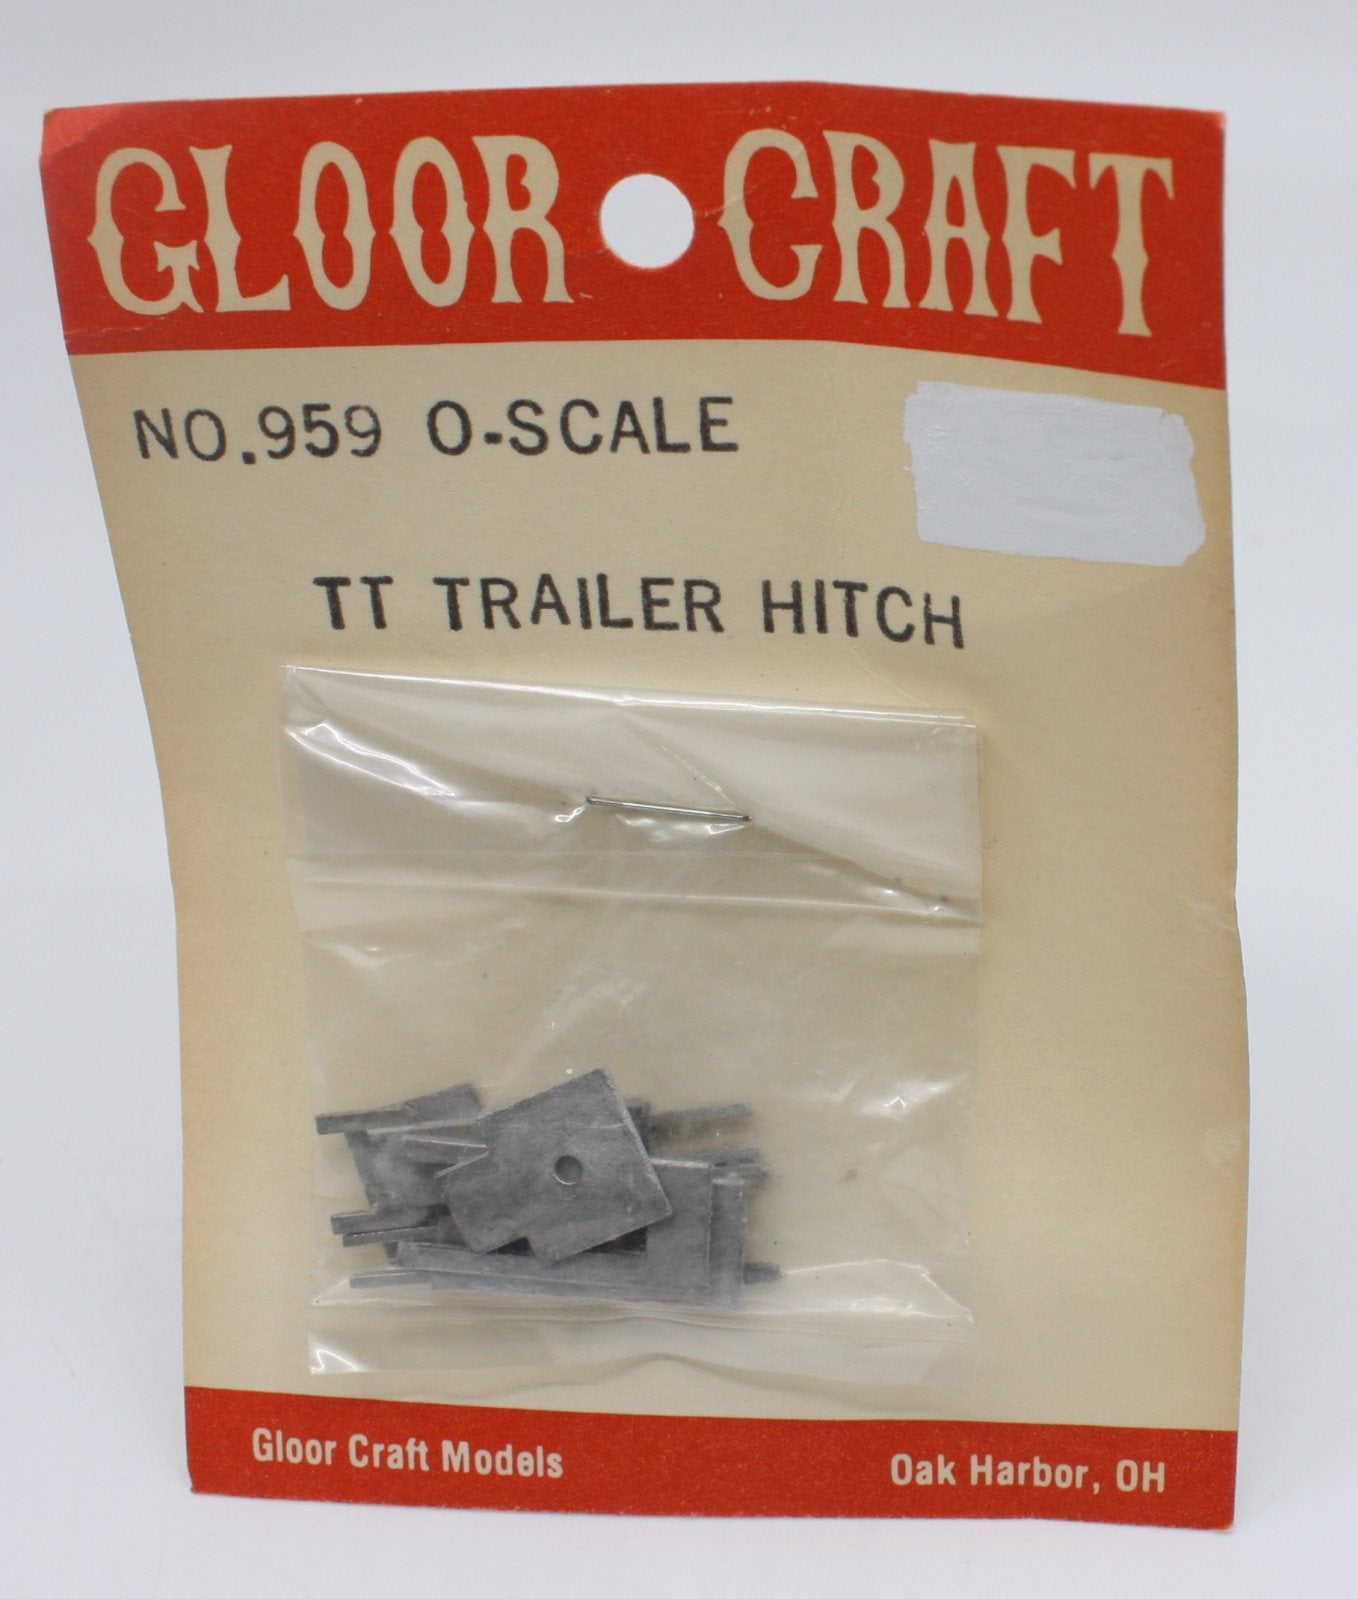 Gloor Craft 959 O Scale TT Trailer Hitch